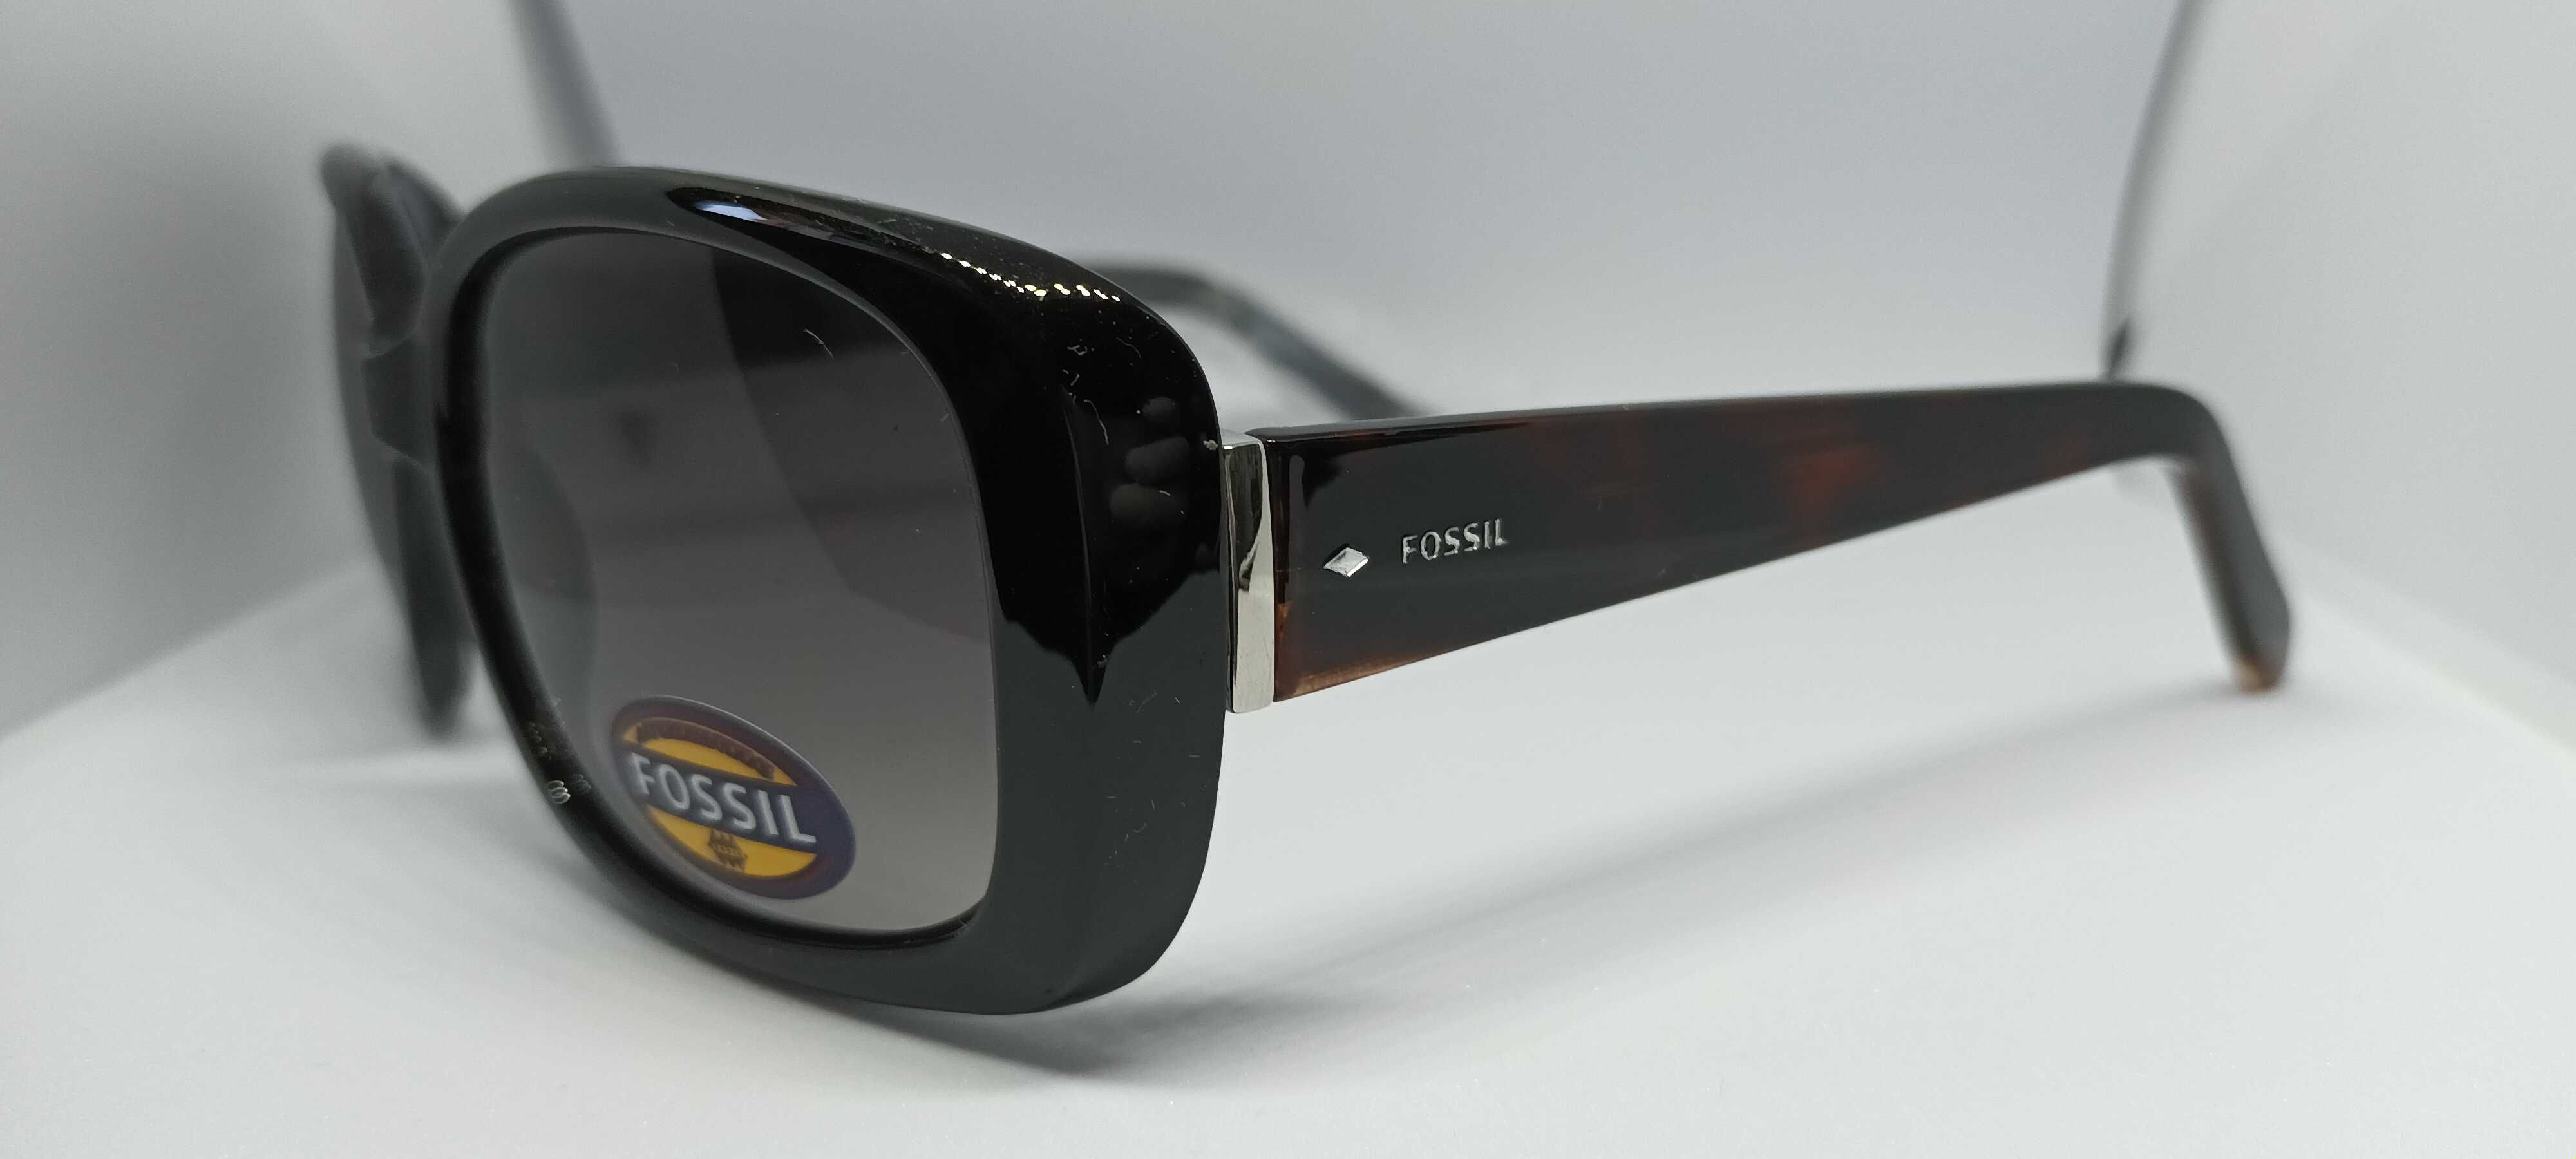 Fossil FW100, ochelari de soare, culoare neagra